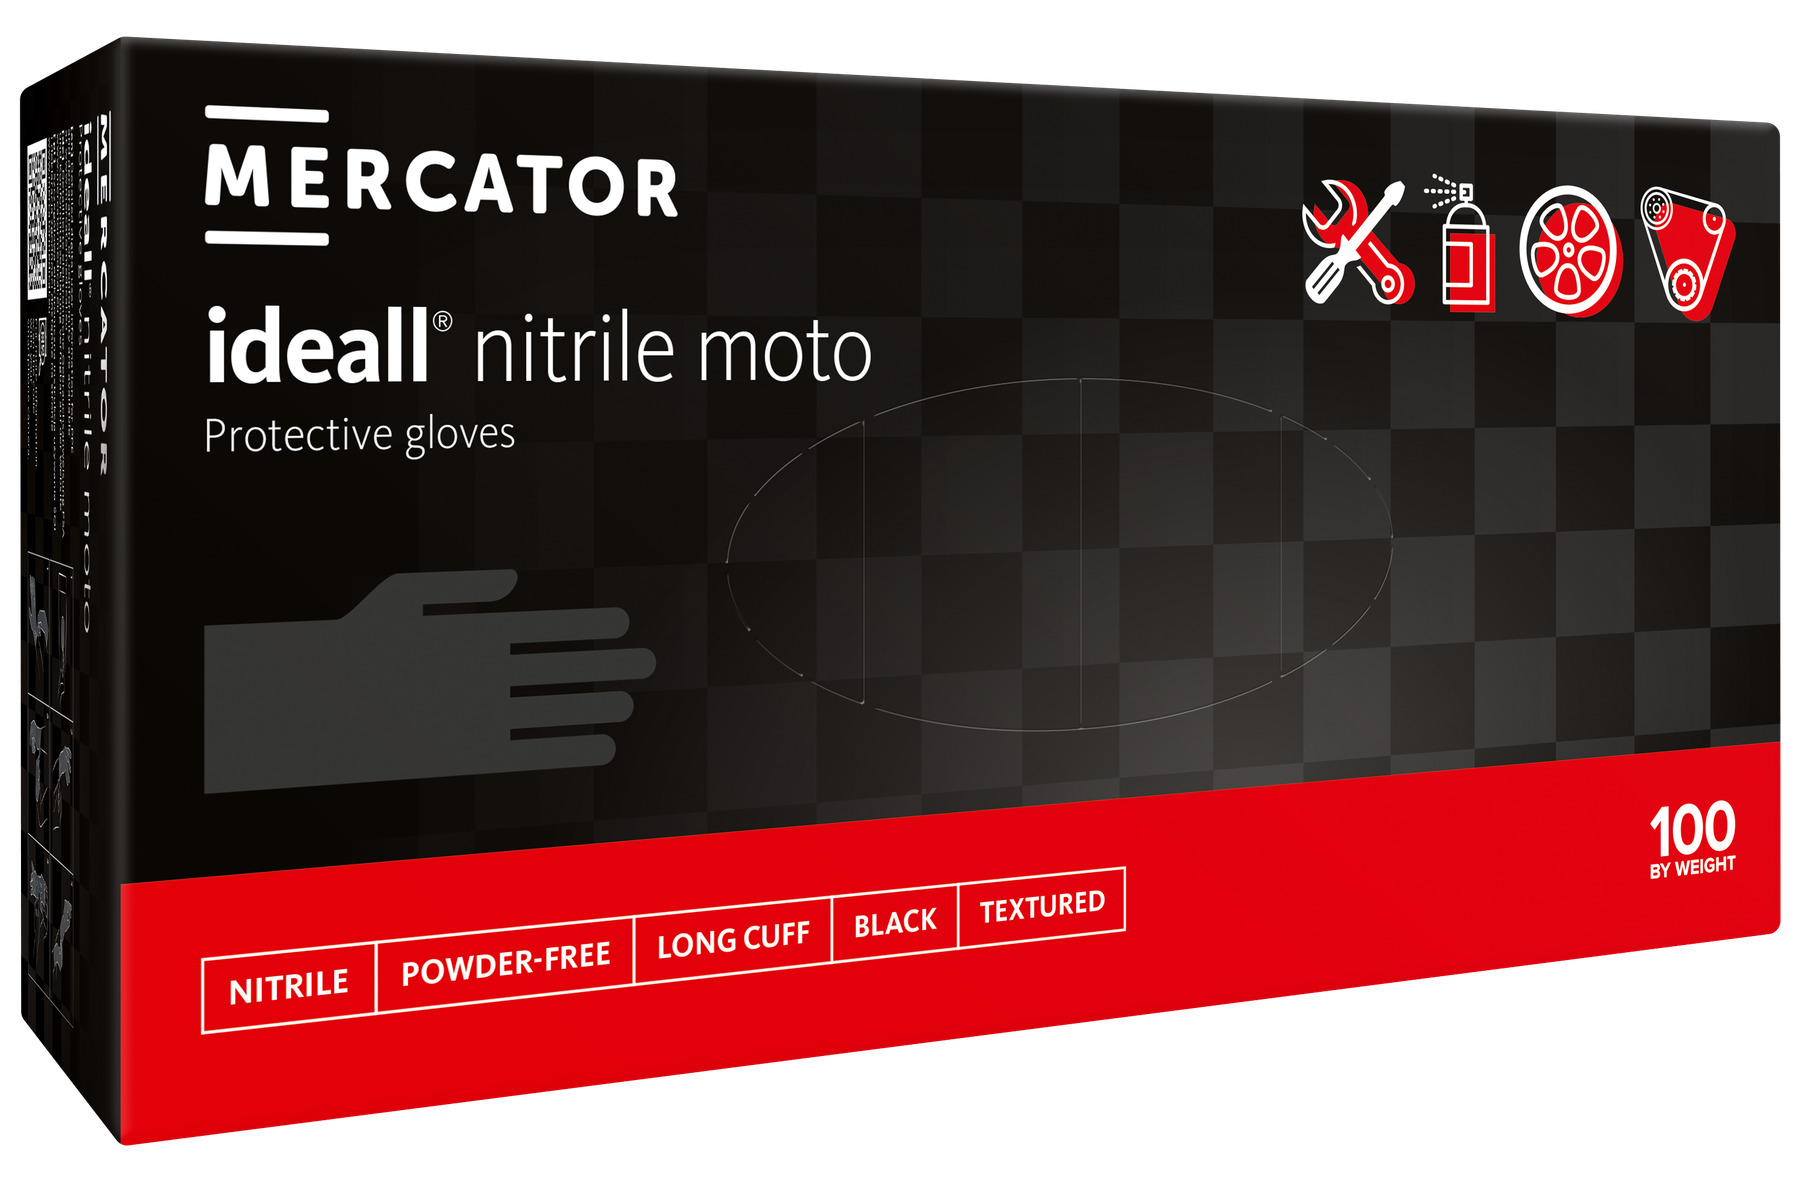 Mercator ideall nitrile moto High-Tech-Handschuhe - extra dick und strapazierfähig